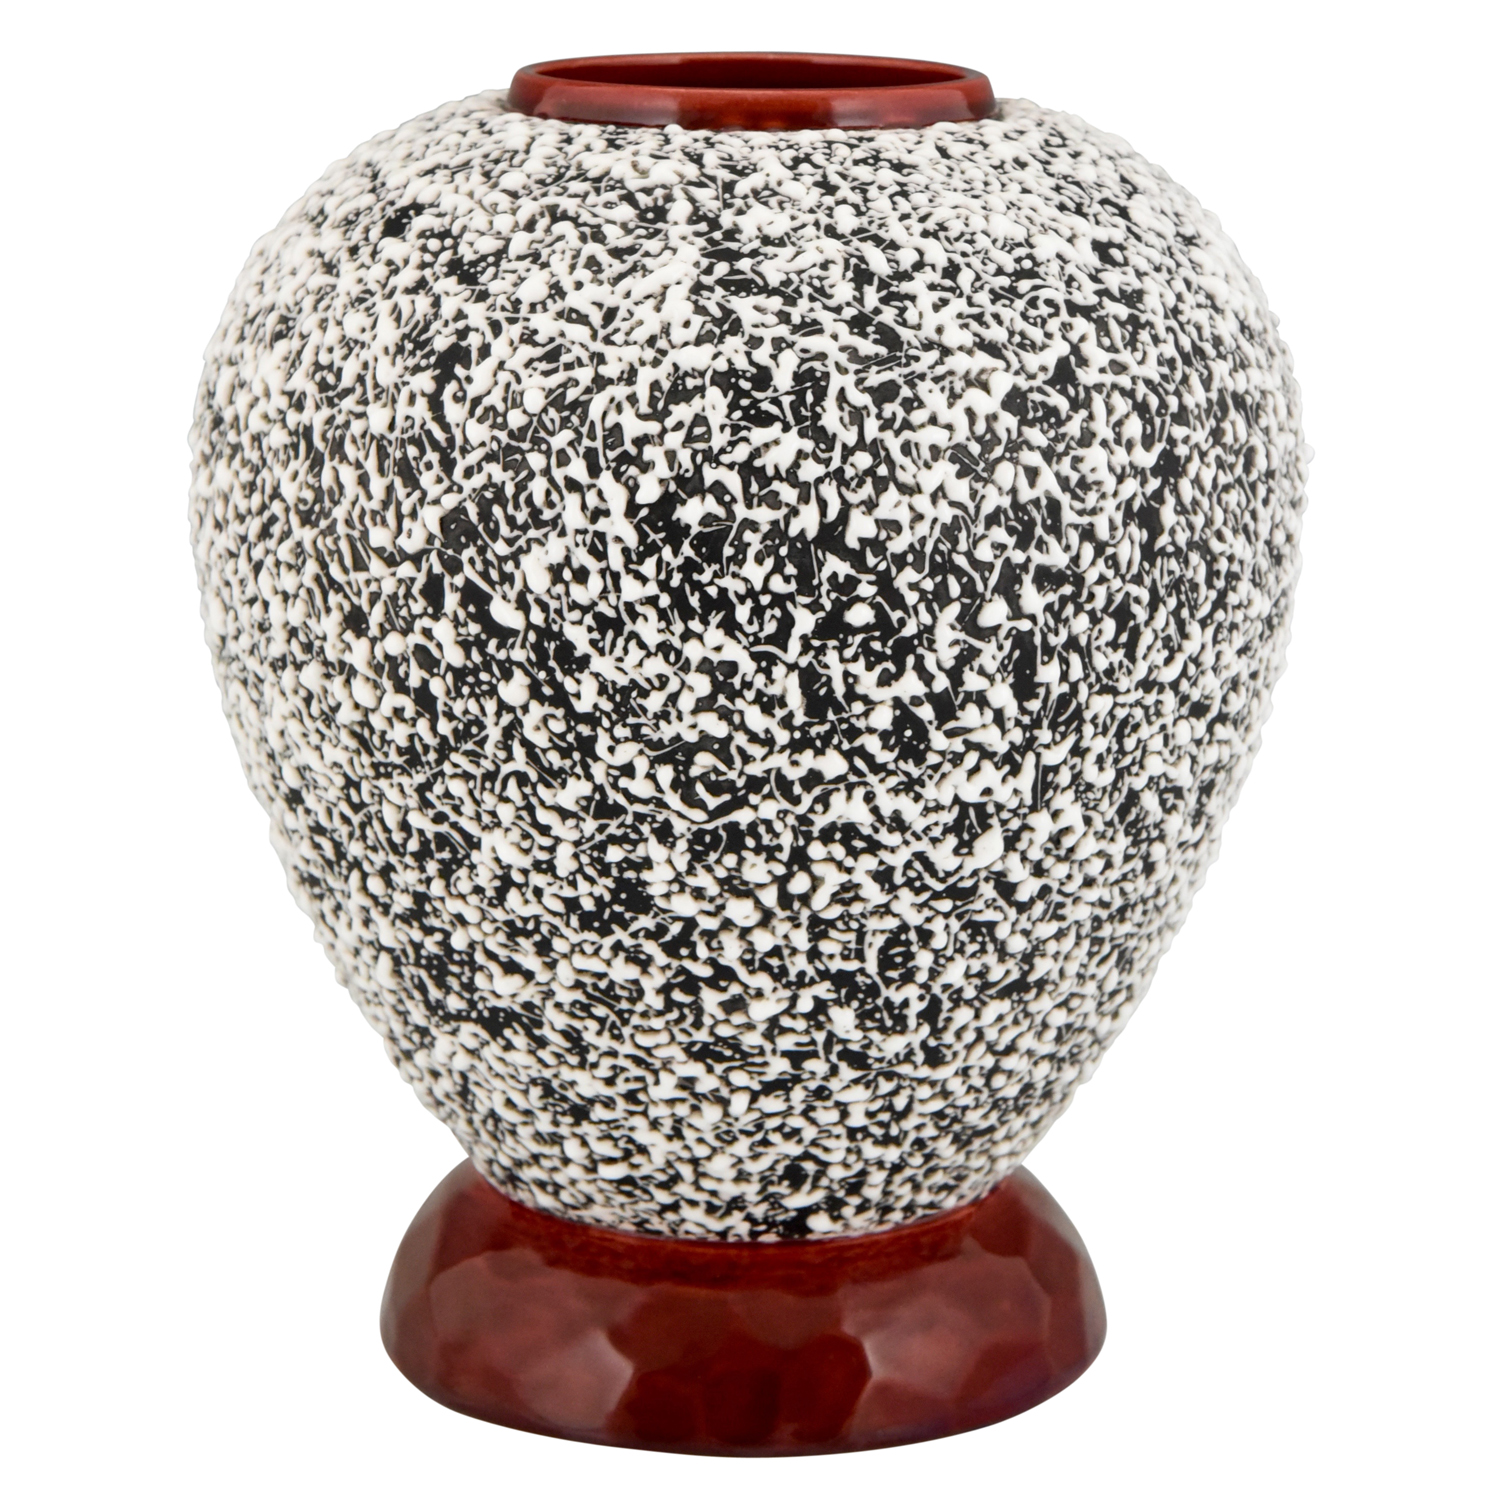 Art Deco globular ceramic vase with textured glaze